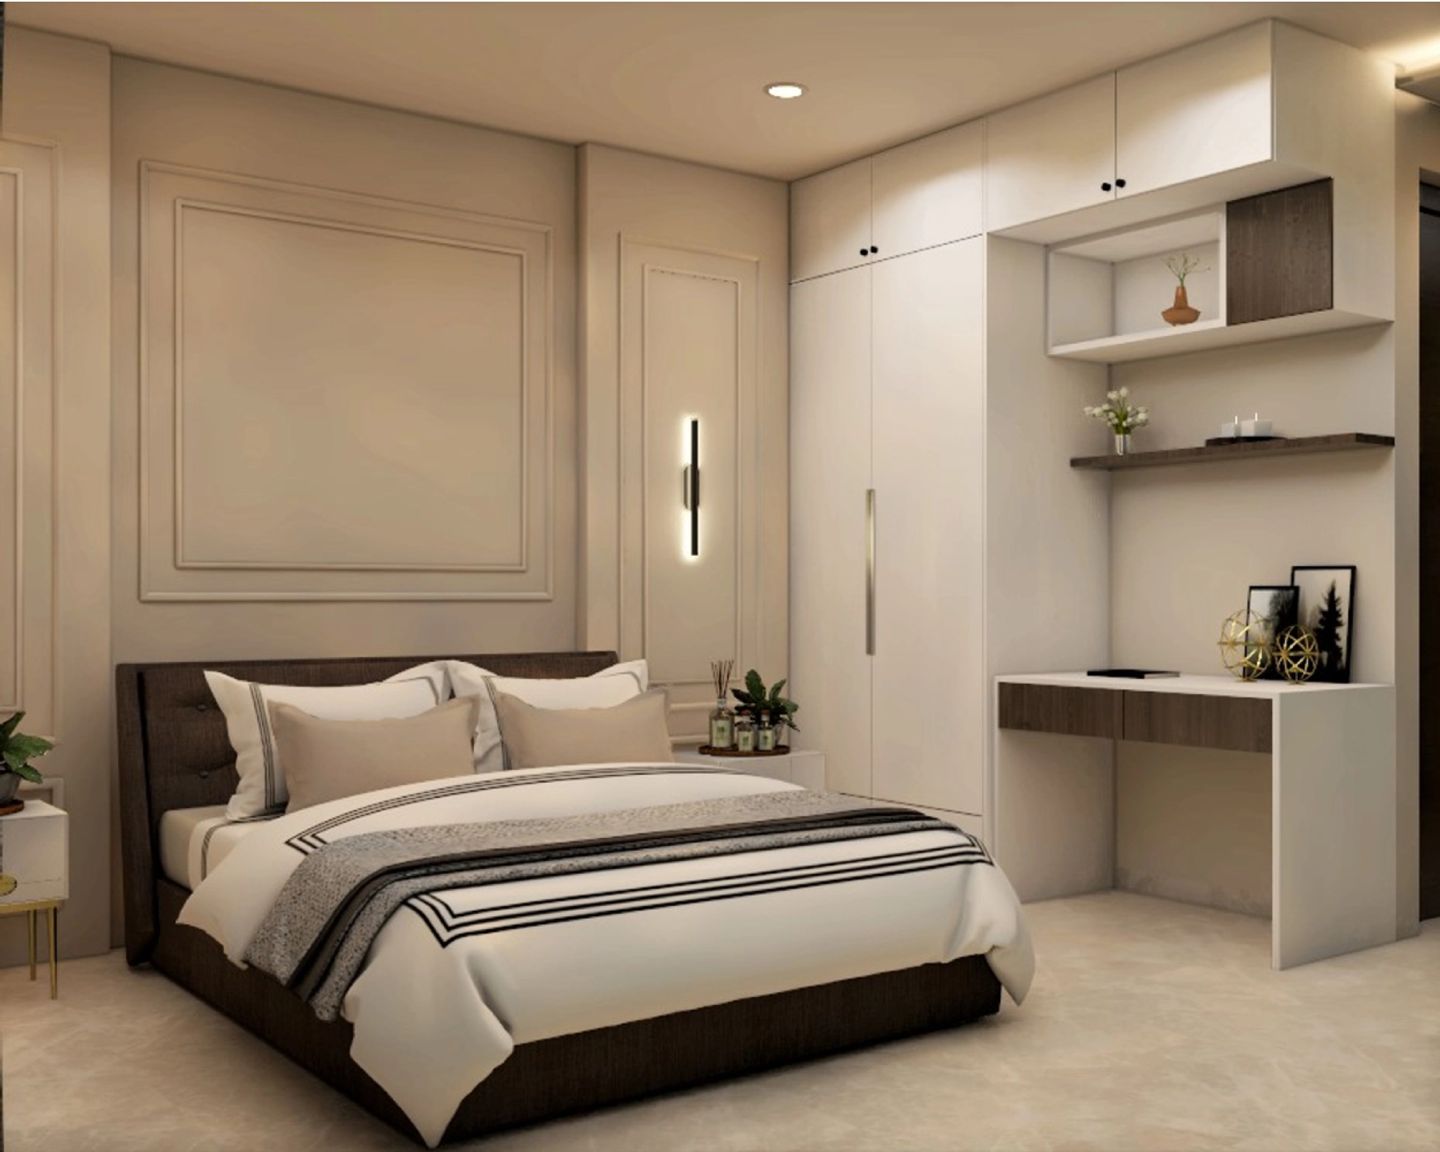 Spacious Guest Bedroom Design - Livspace